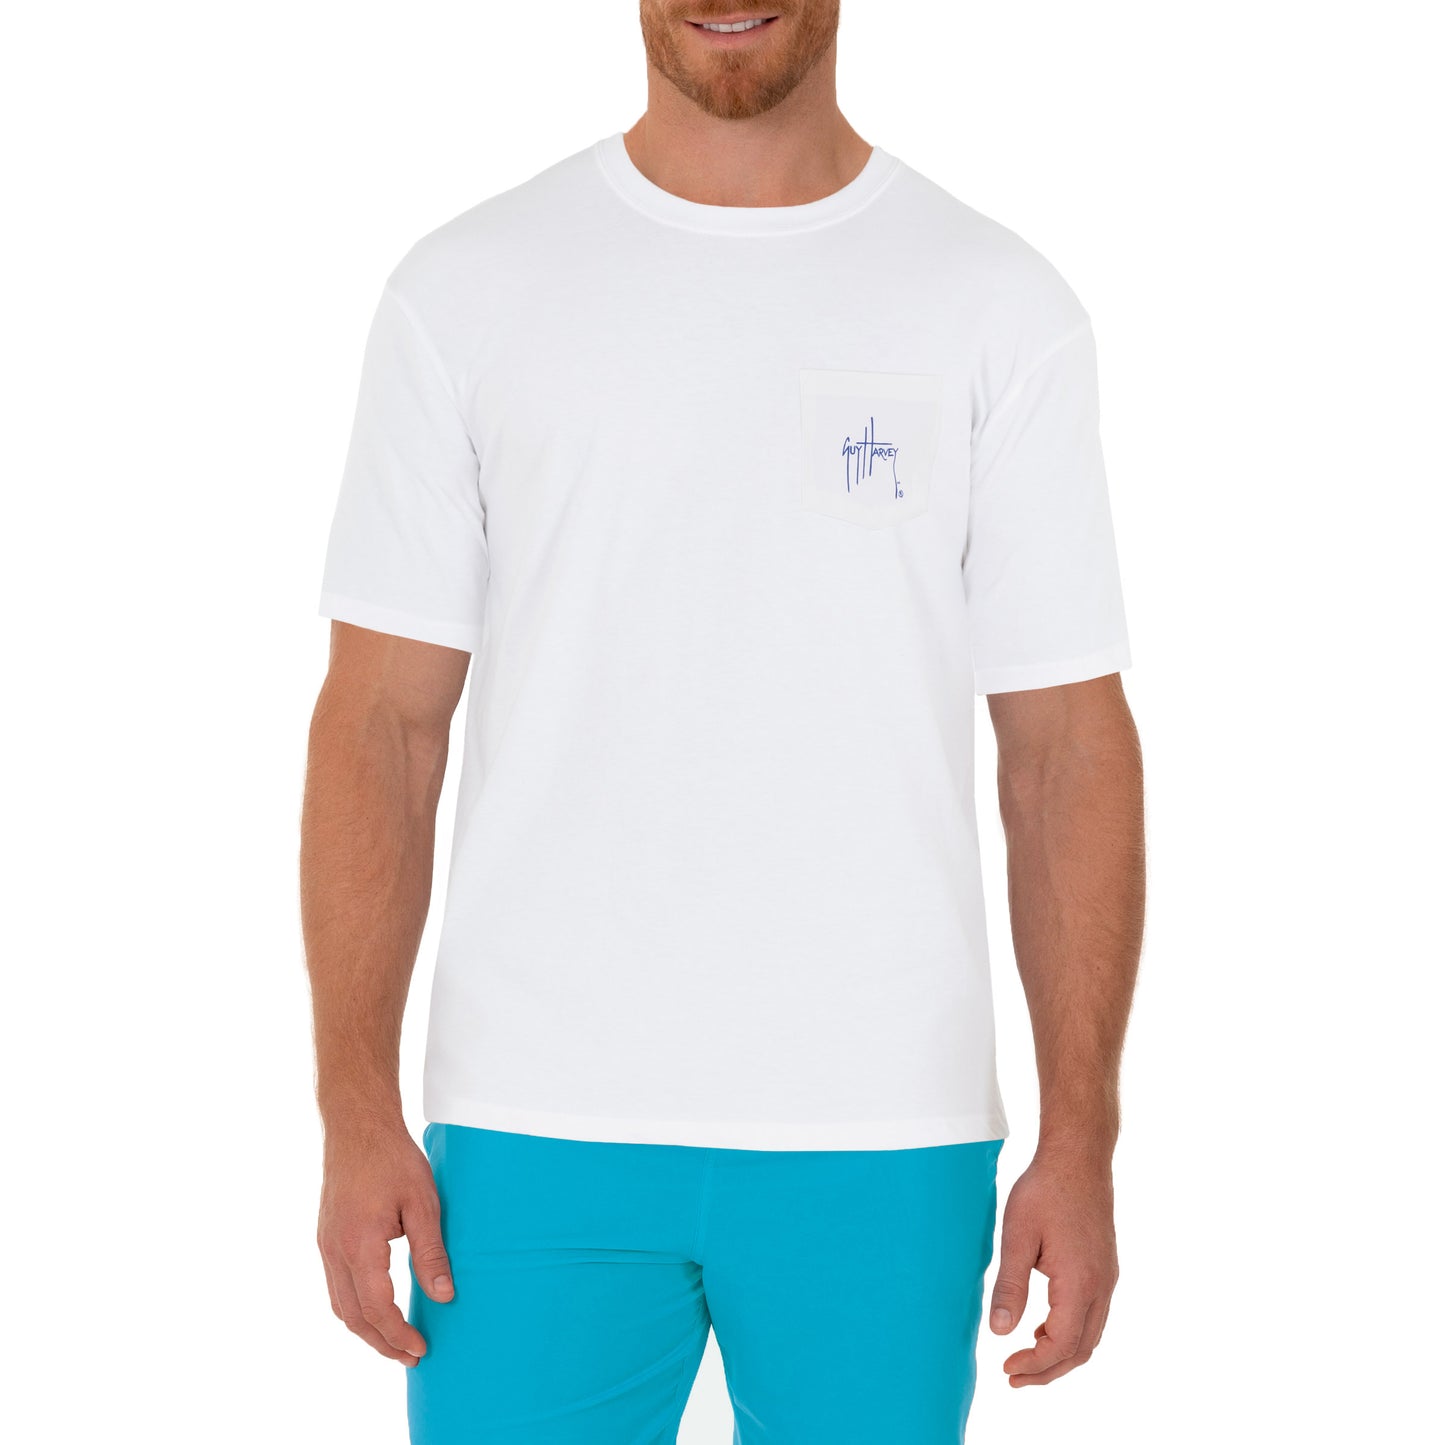 Men's Offshore Haul Wahoo Short Sleeve Pocket White T-Shirt View 2